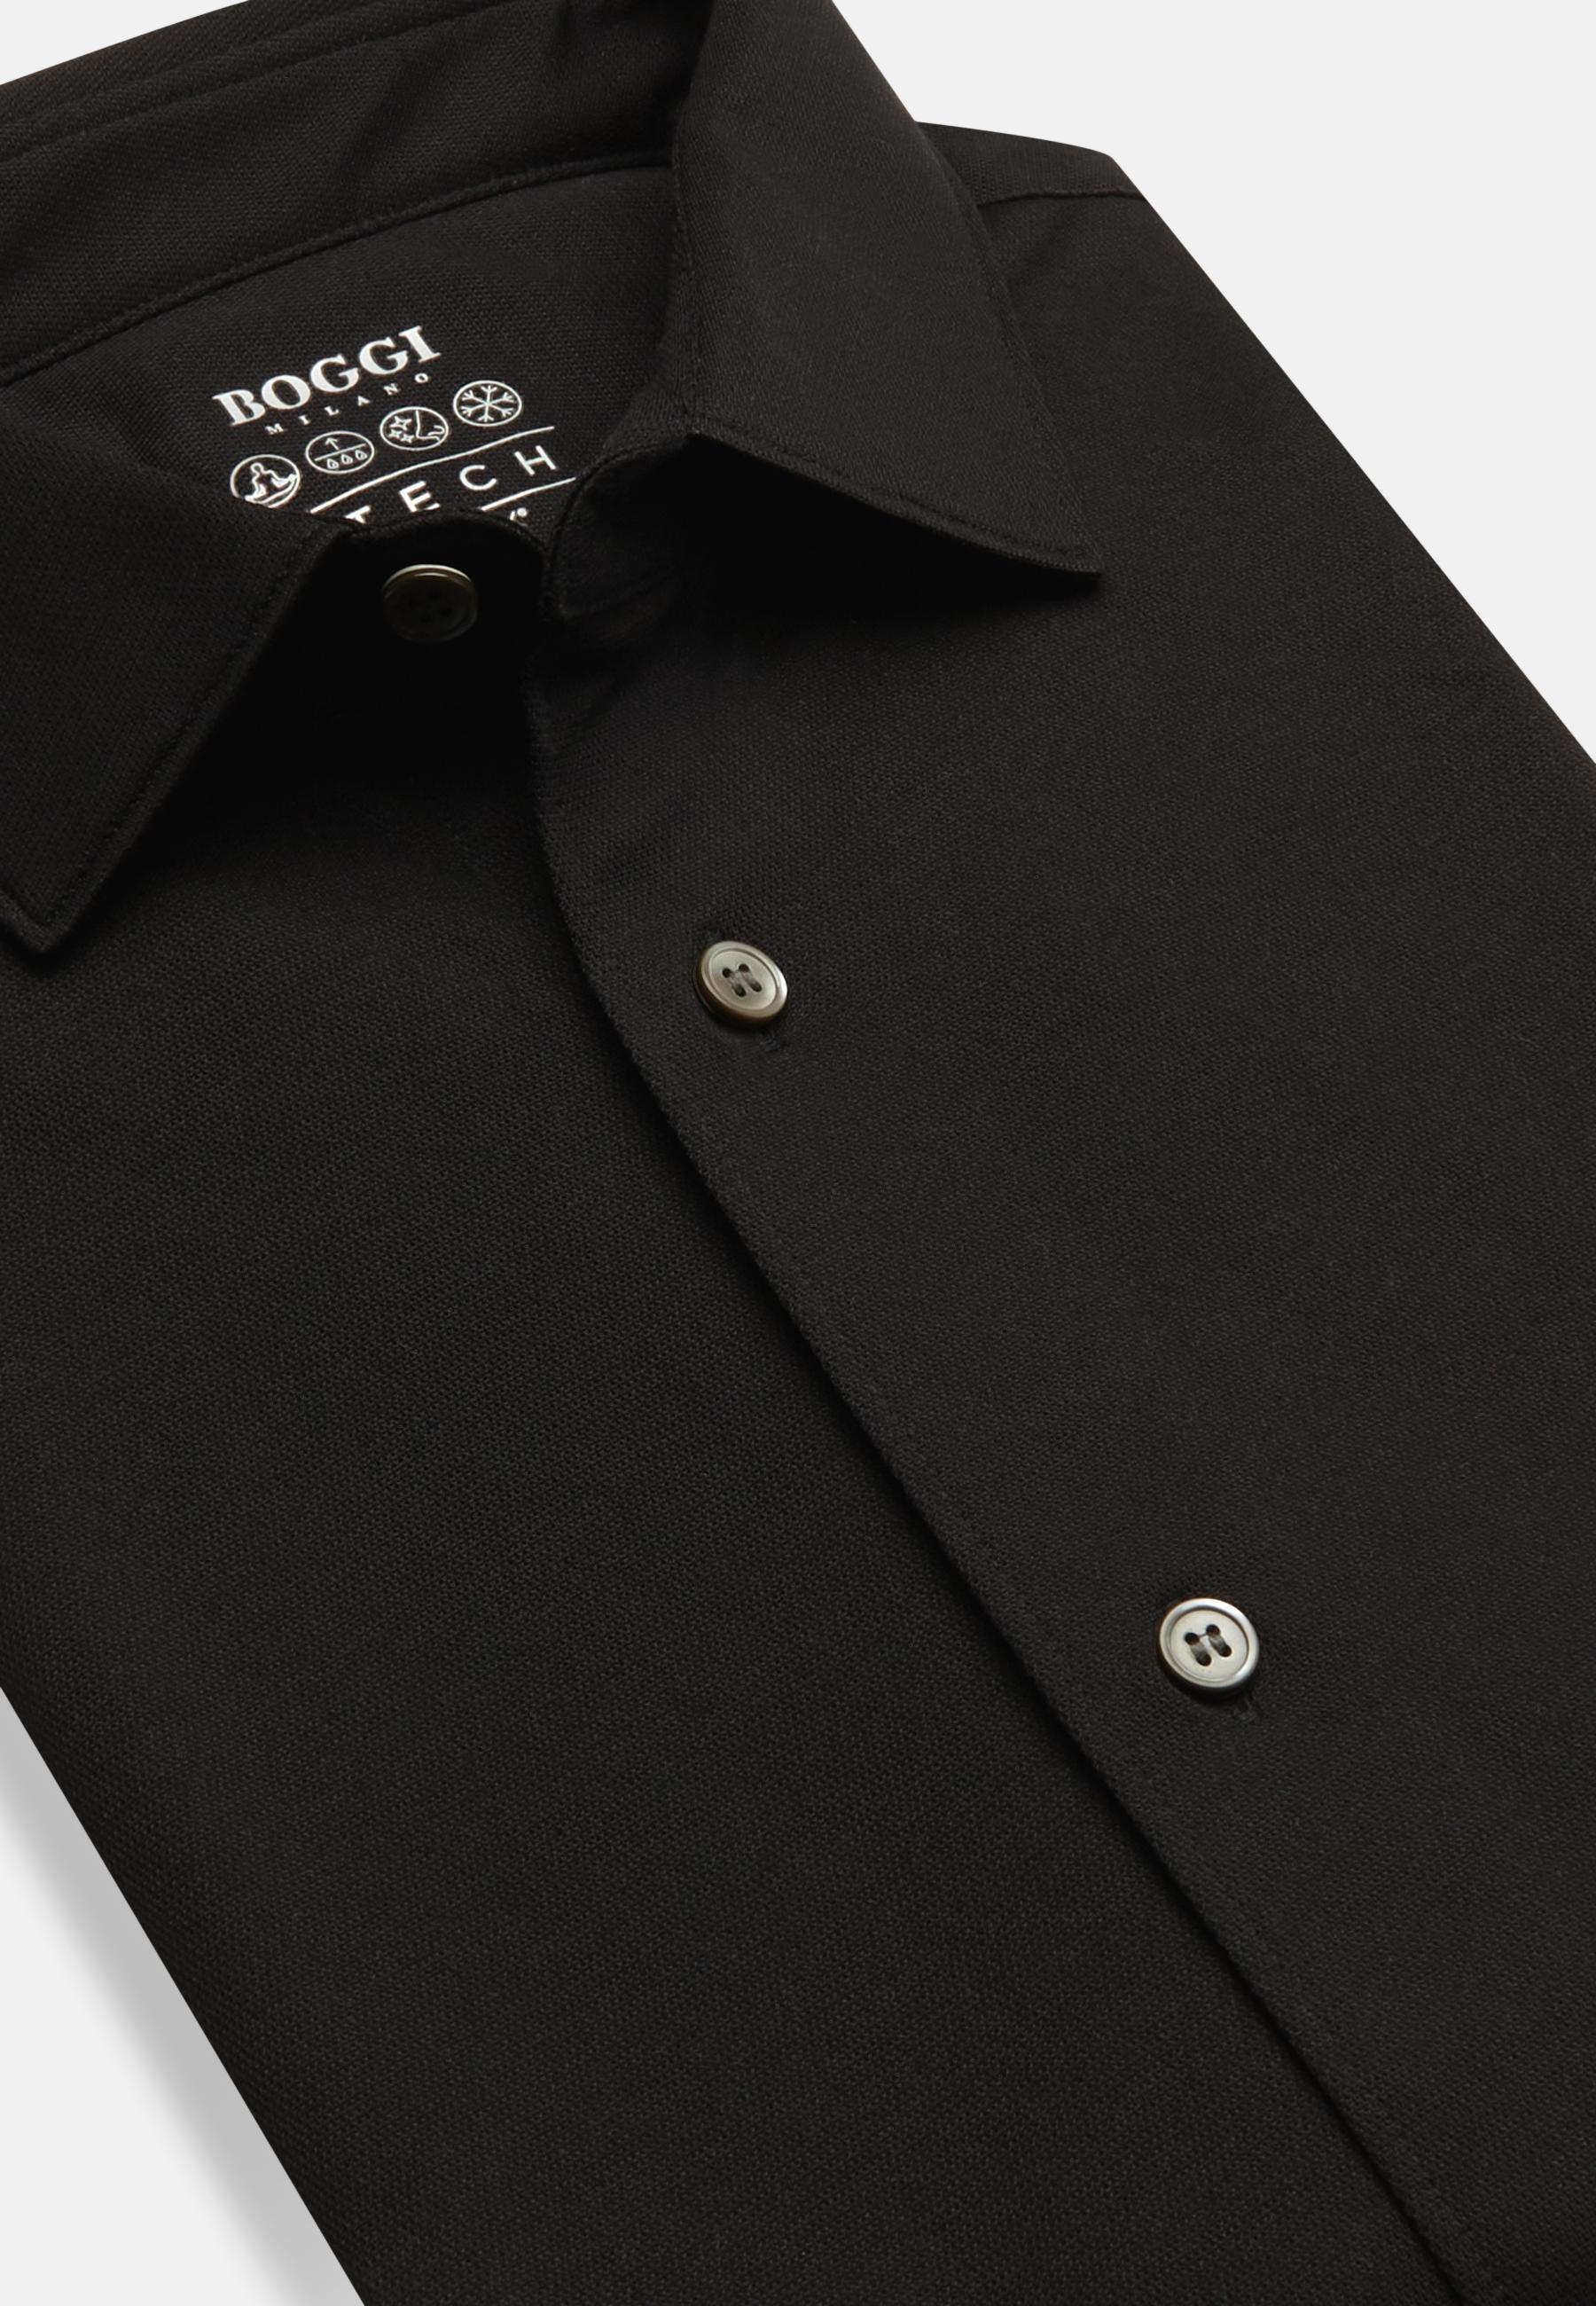 Boggi Milano - Black Slim Fit Cotton Shirt